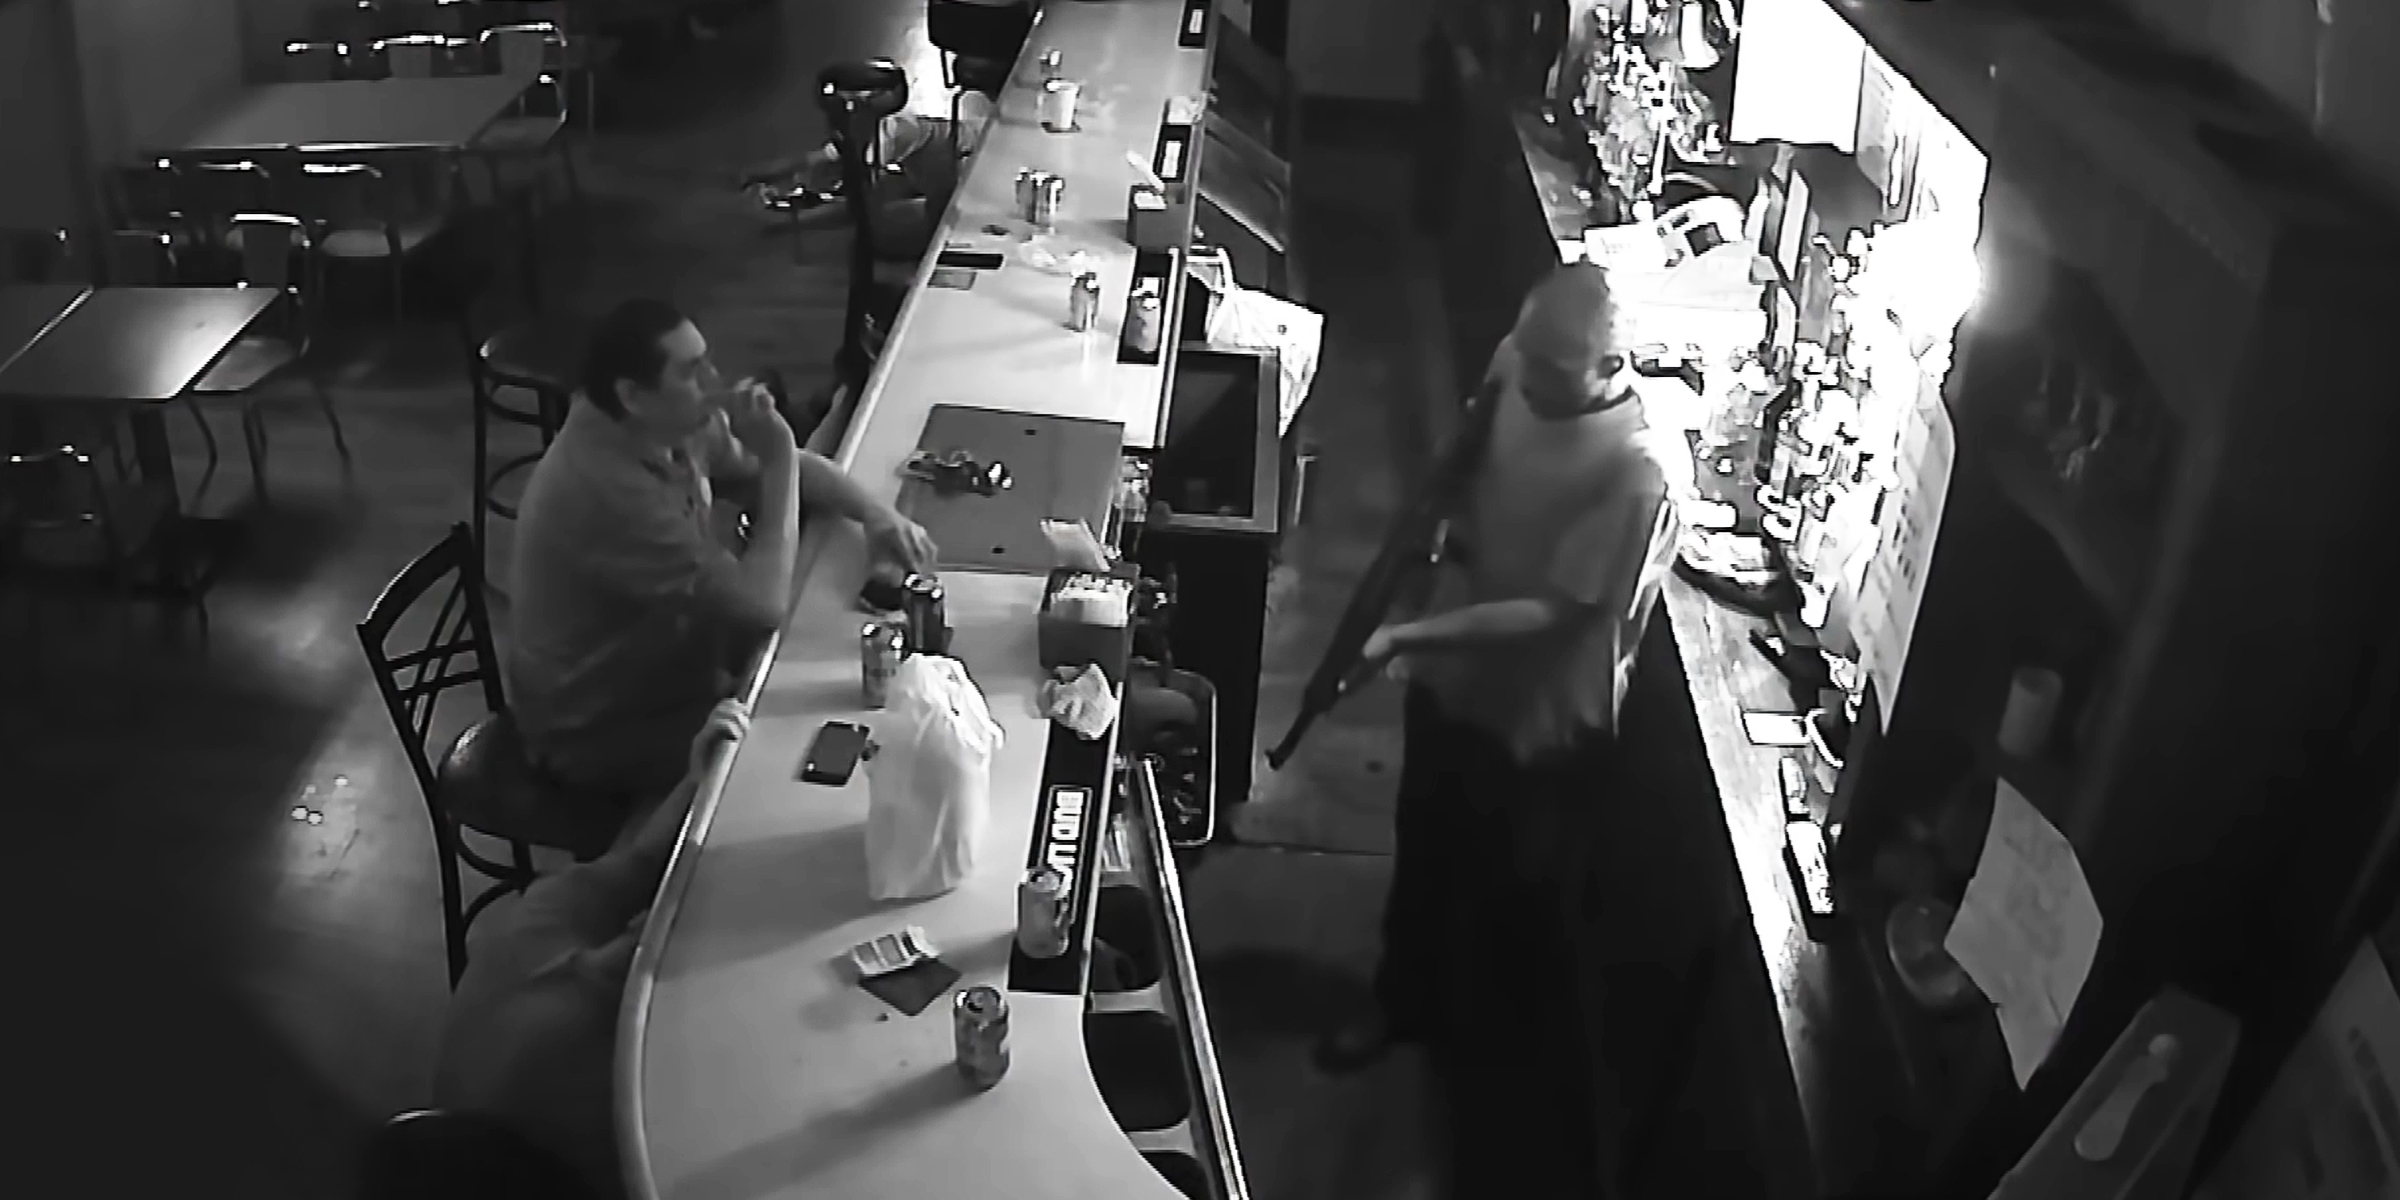 Tony Tovar Facing Down a Gunman at His Local Bar, 2019 | Source: YouTube.com/InsideEdition